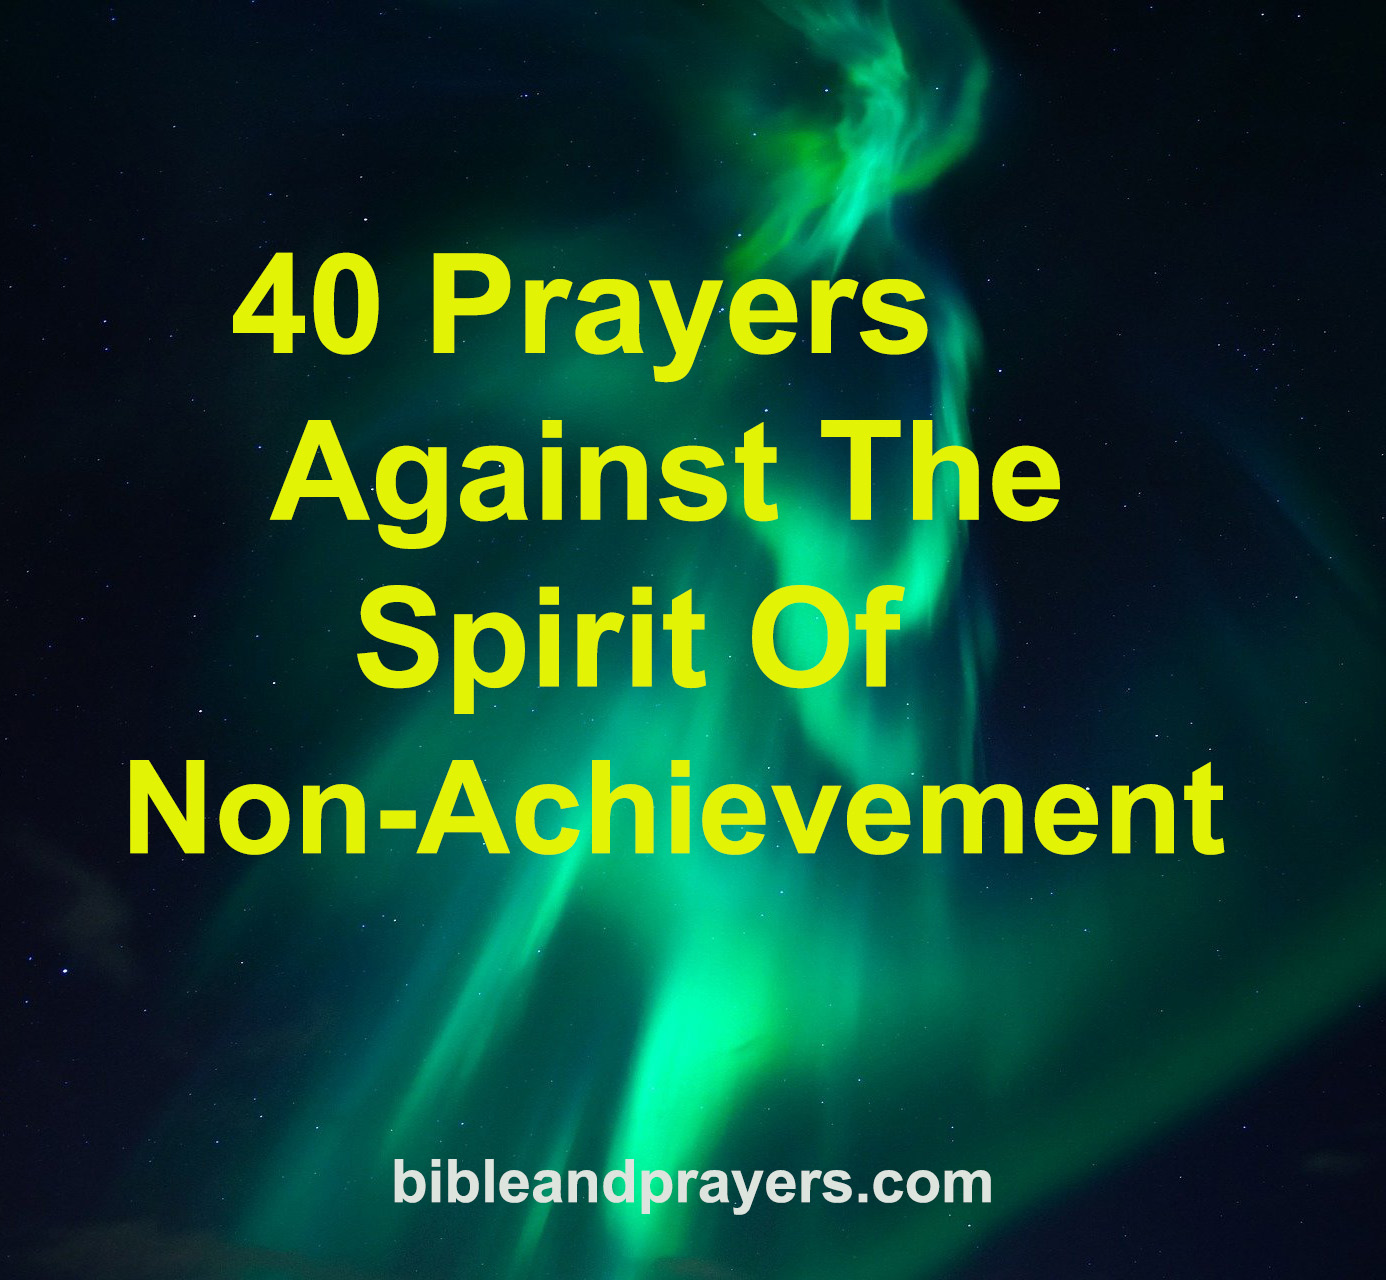 40 Prayers Against The Spirit Of Non-Achievement